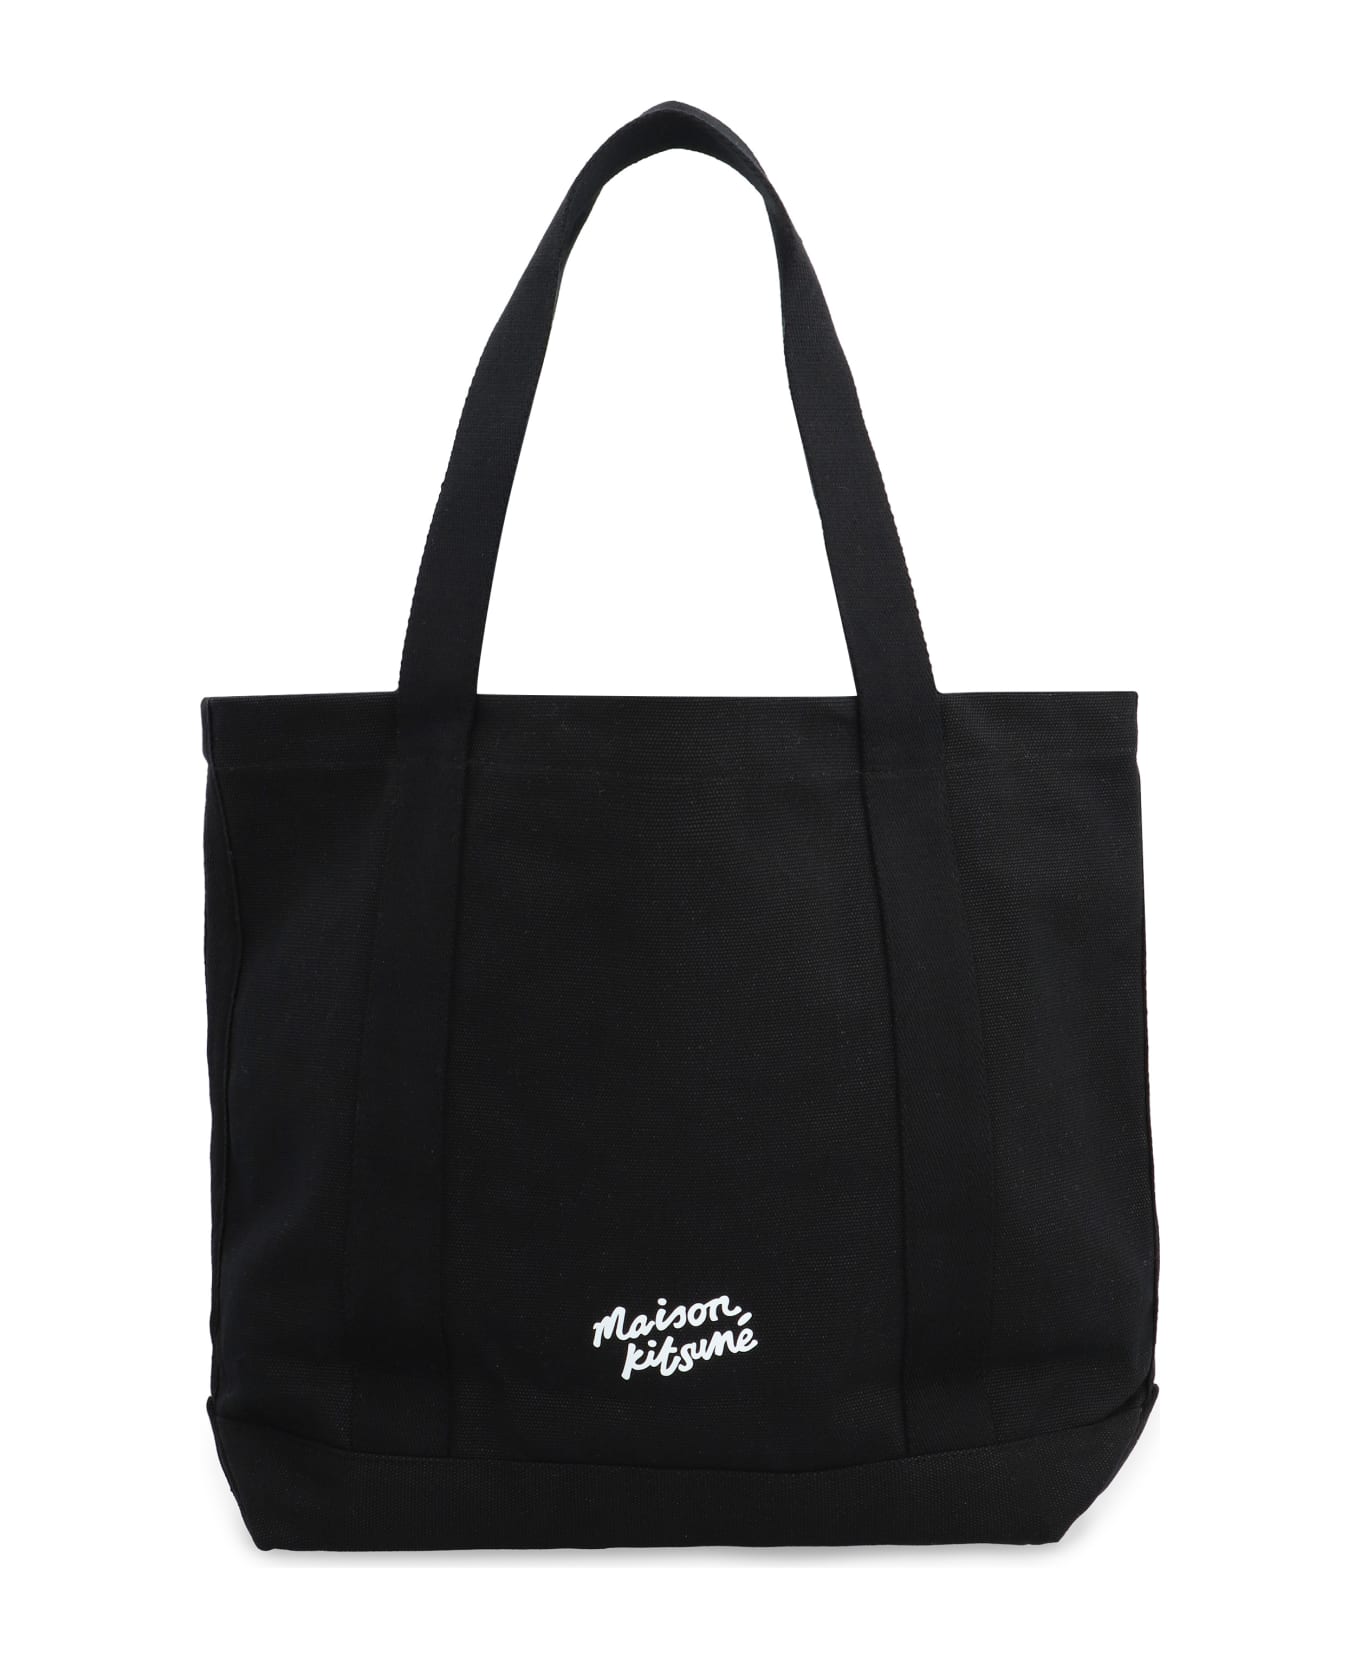 Maison Kitsuné Fox Head Canvas Tote Bag - black トートバッグ